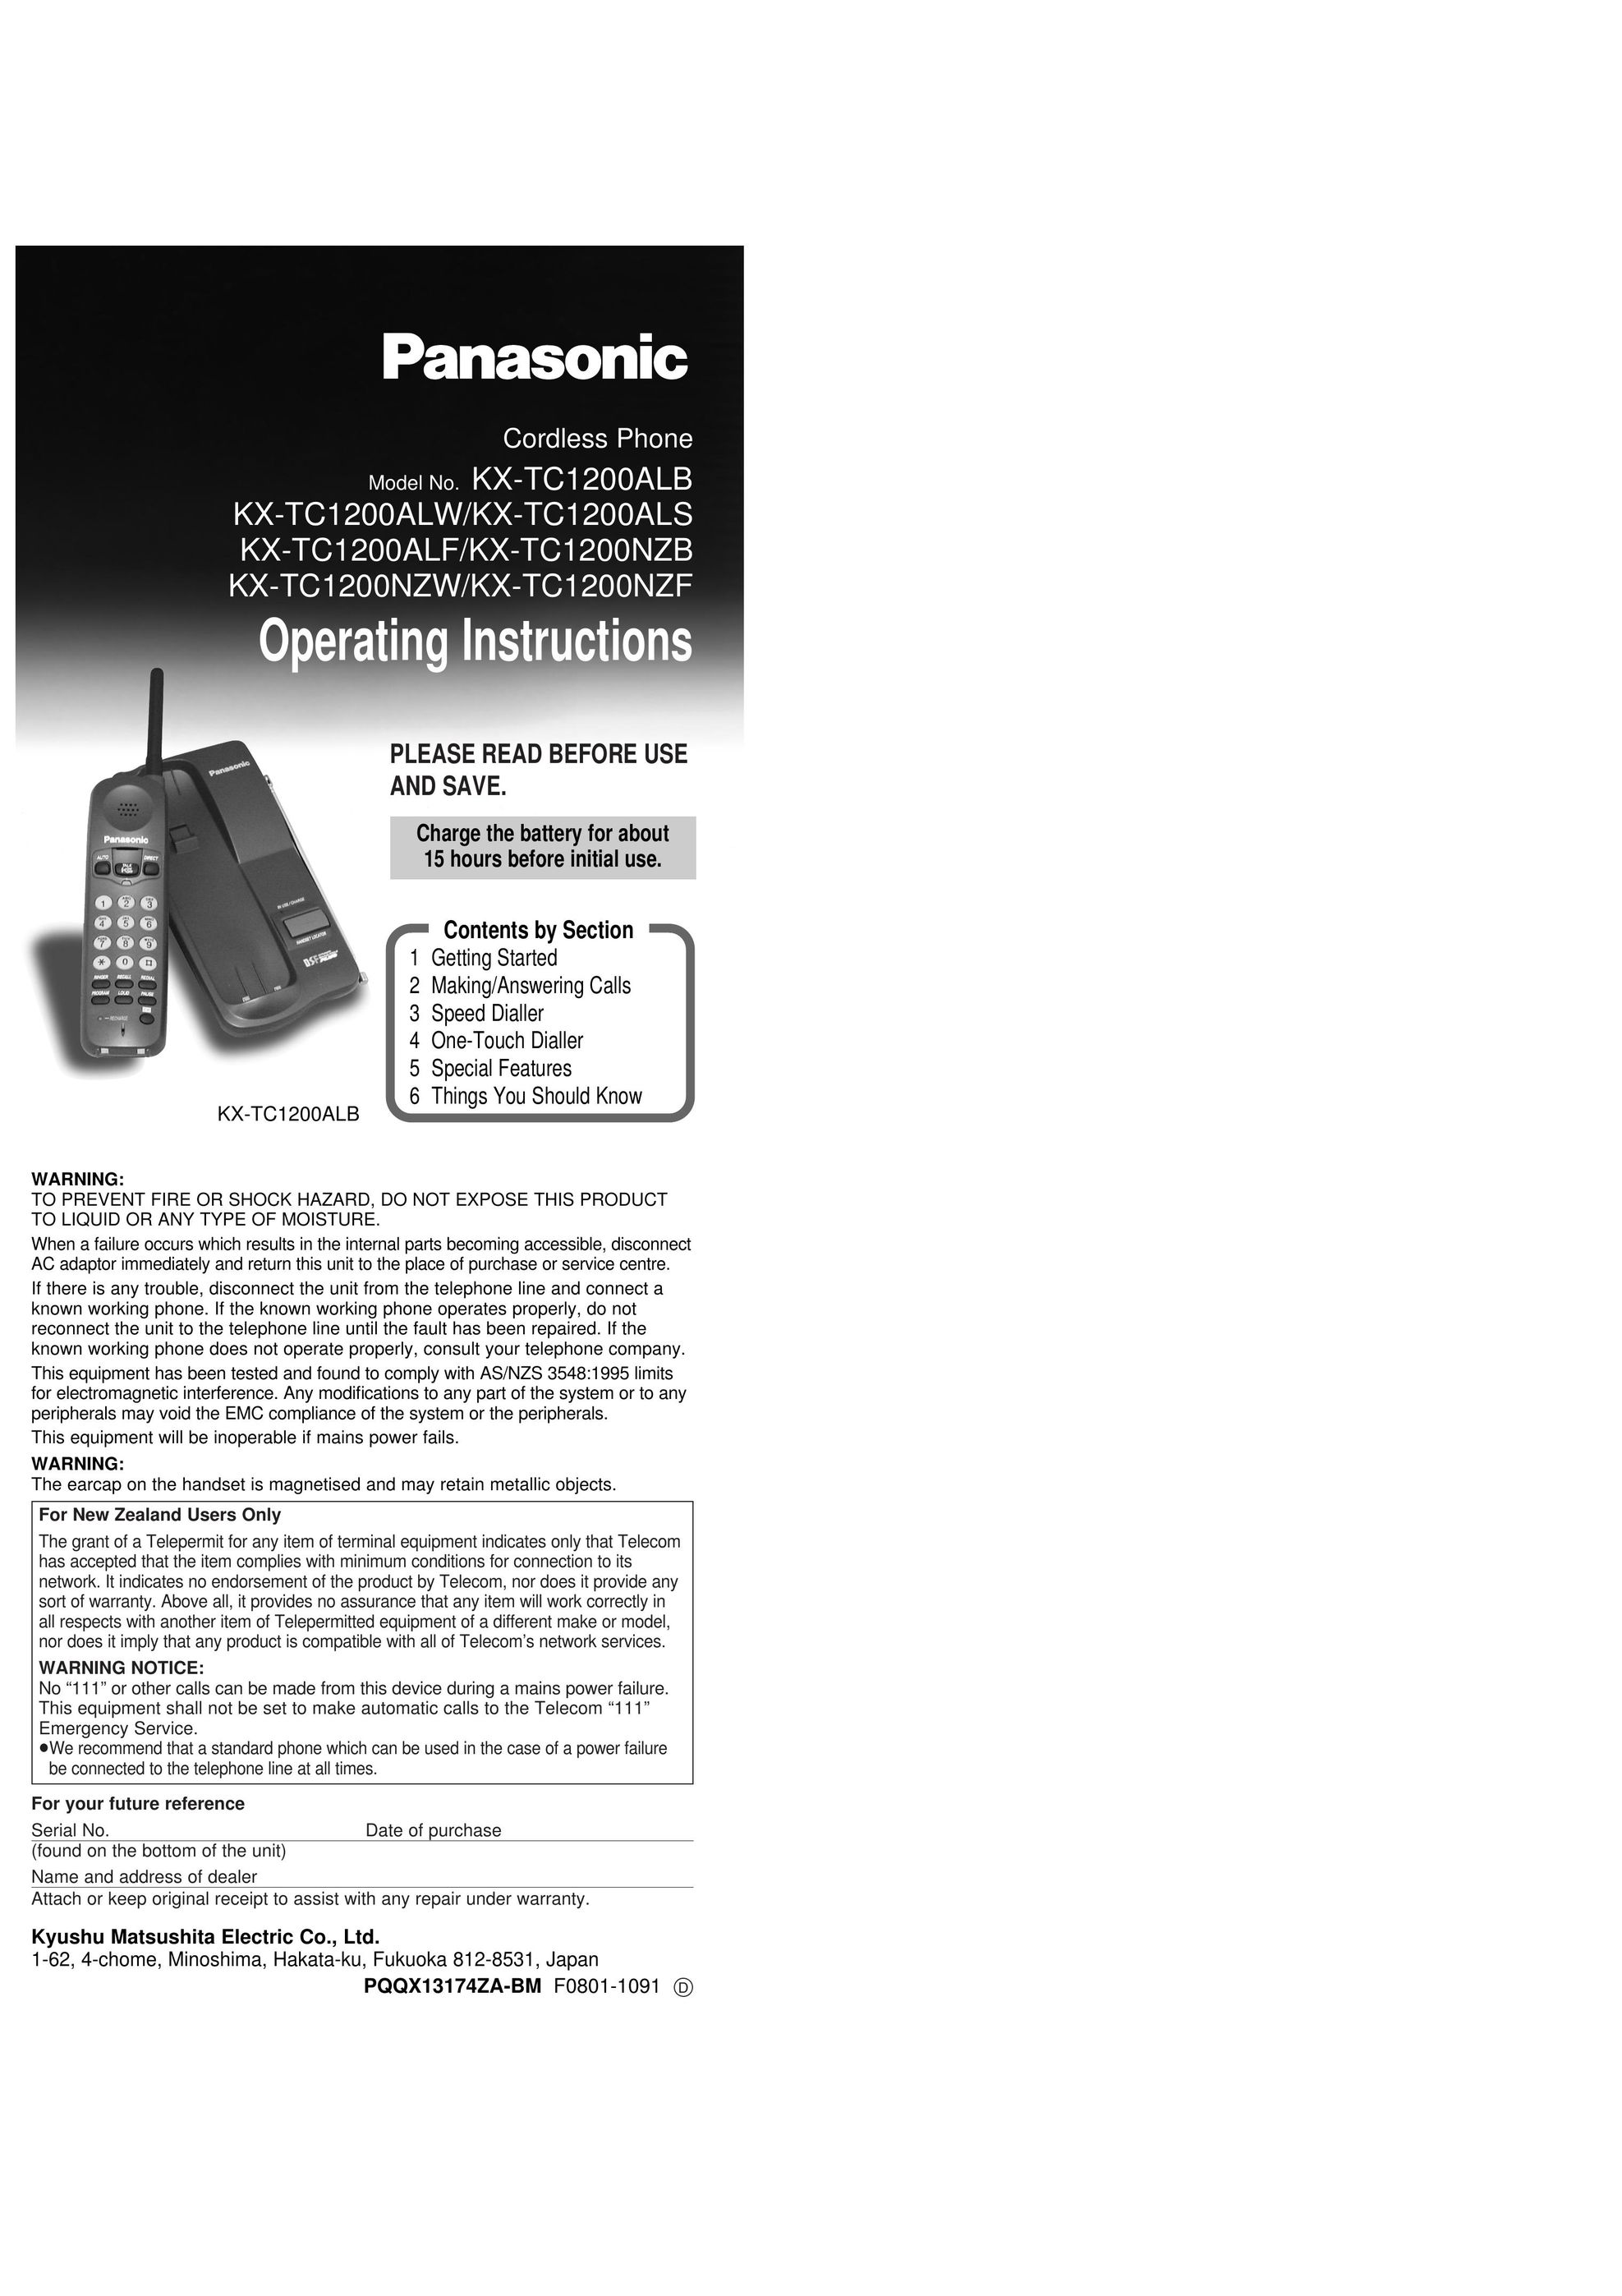 Panasonic KX-TC1200ALW Tablet User Manual